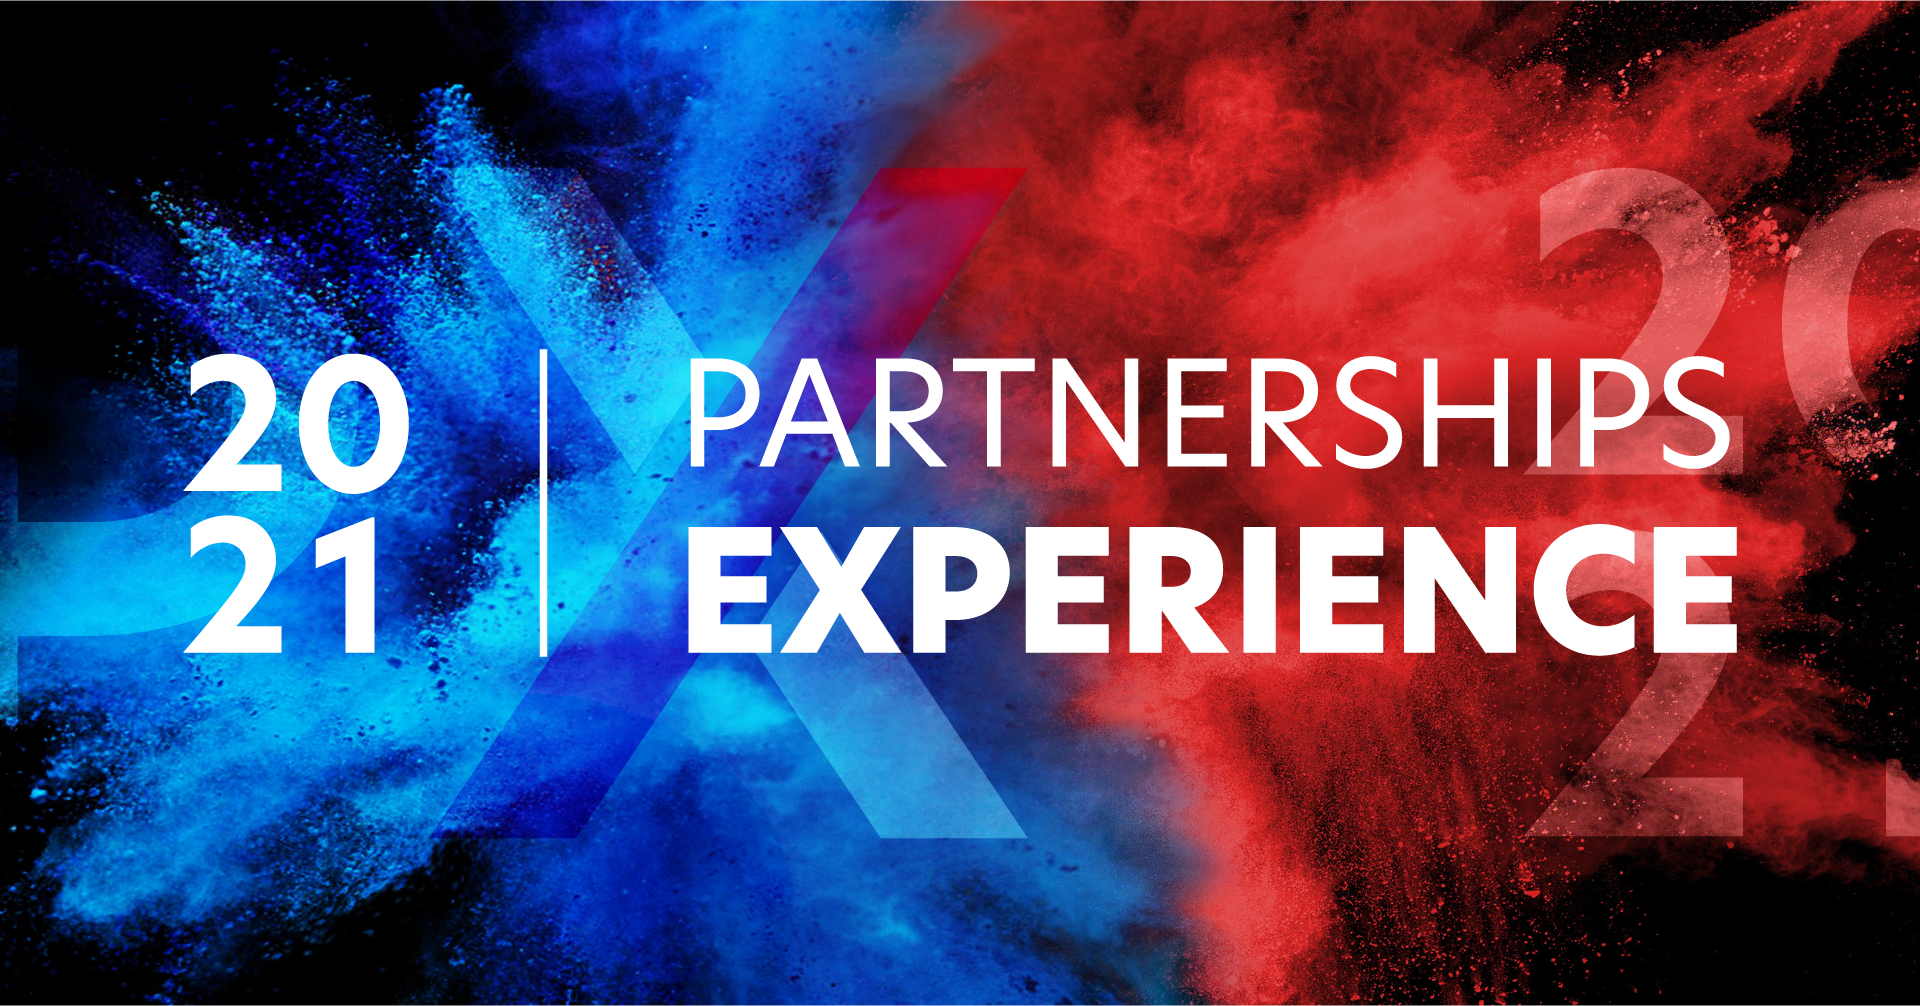 Partnerships Experience | Impact